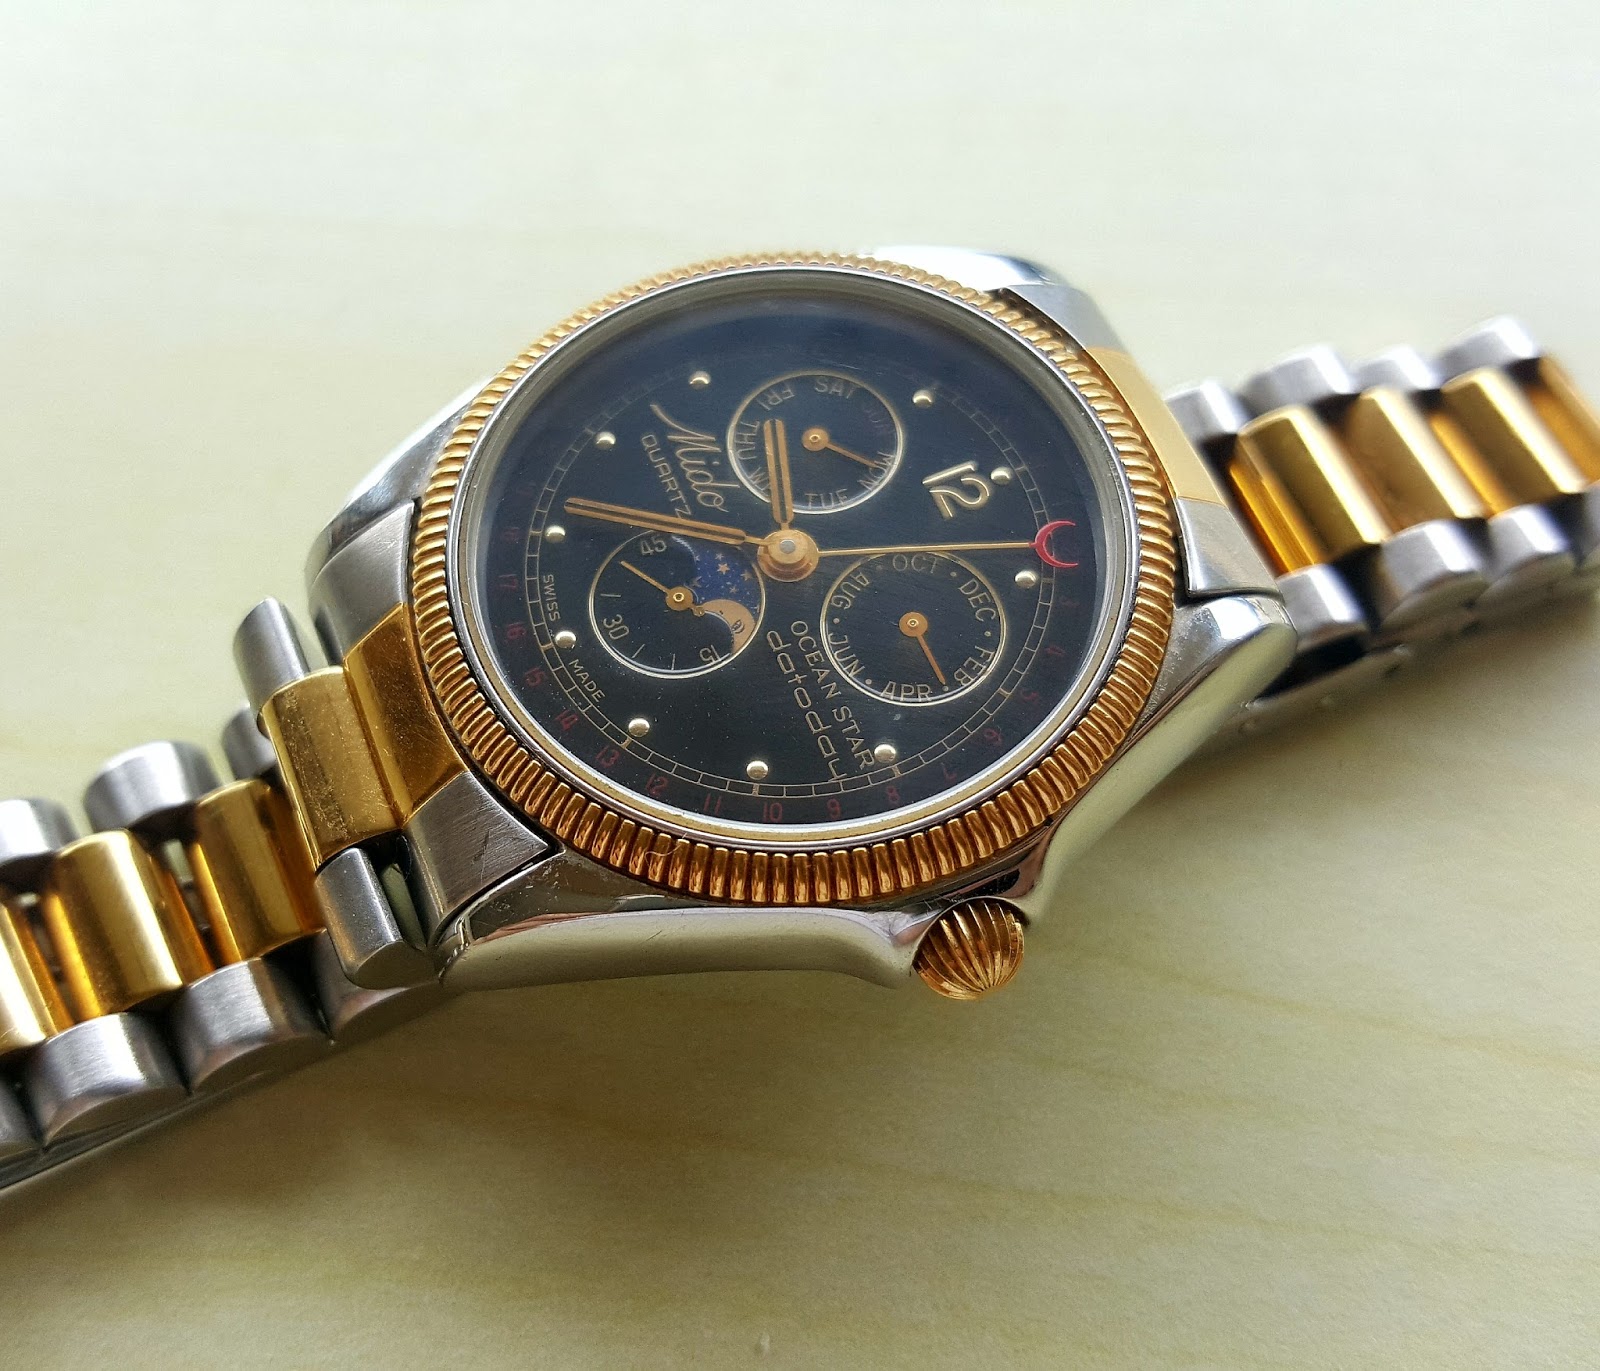 Sold watch. Часы Мидо антимагнитные.